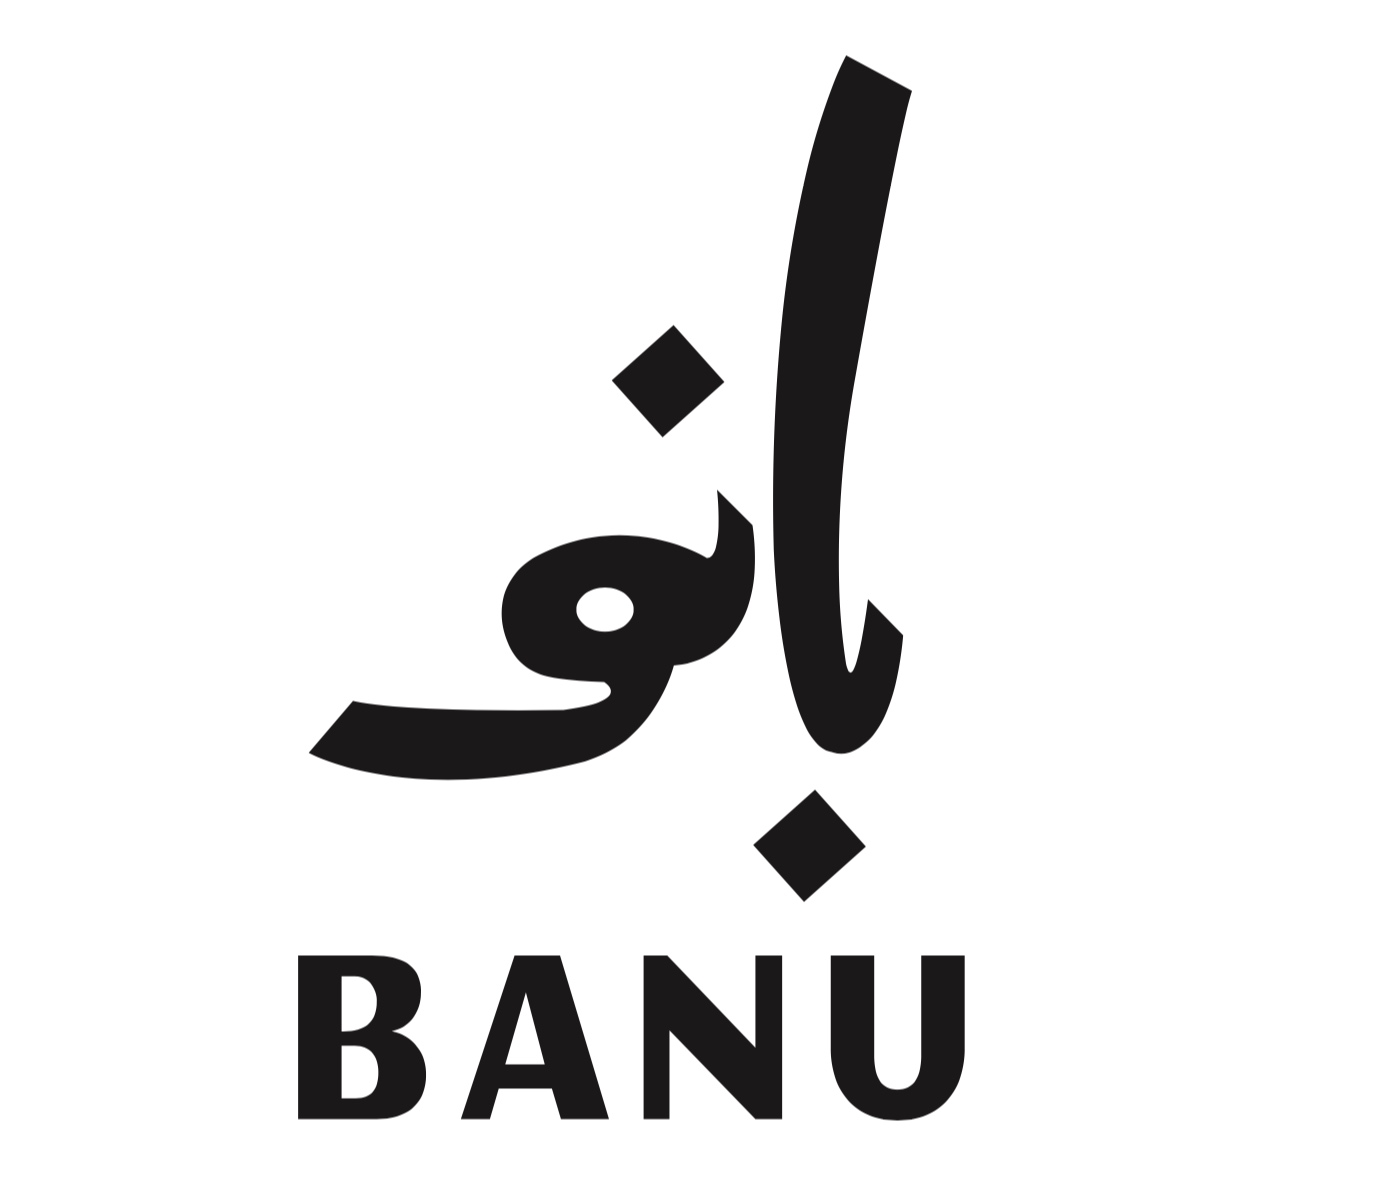 Banu Iranian Eatery and Commissary